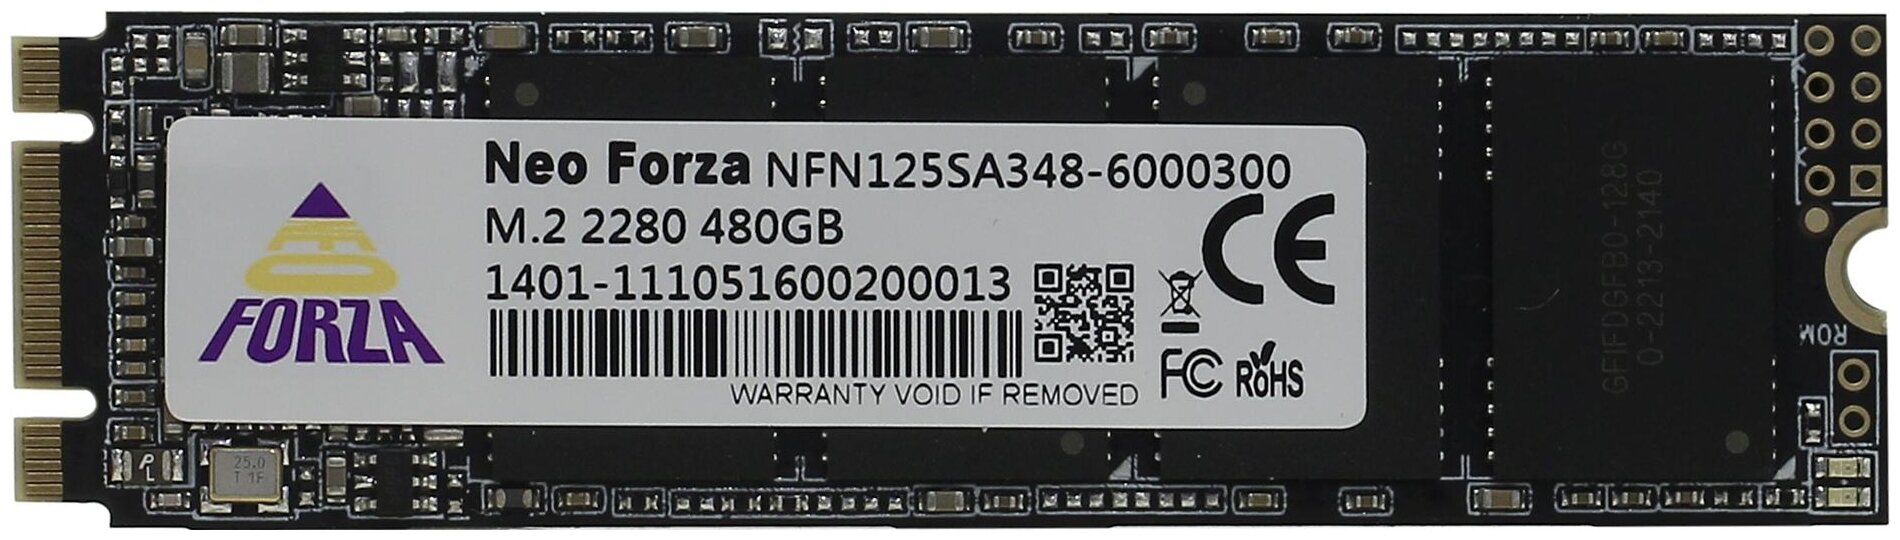 Твердотельный накопитель (SSD) Neo Forza 480Gb Zion, 2280, SATA3 (NFN125SA348-6000300) Retail